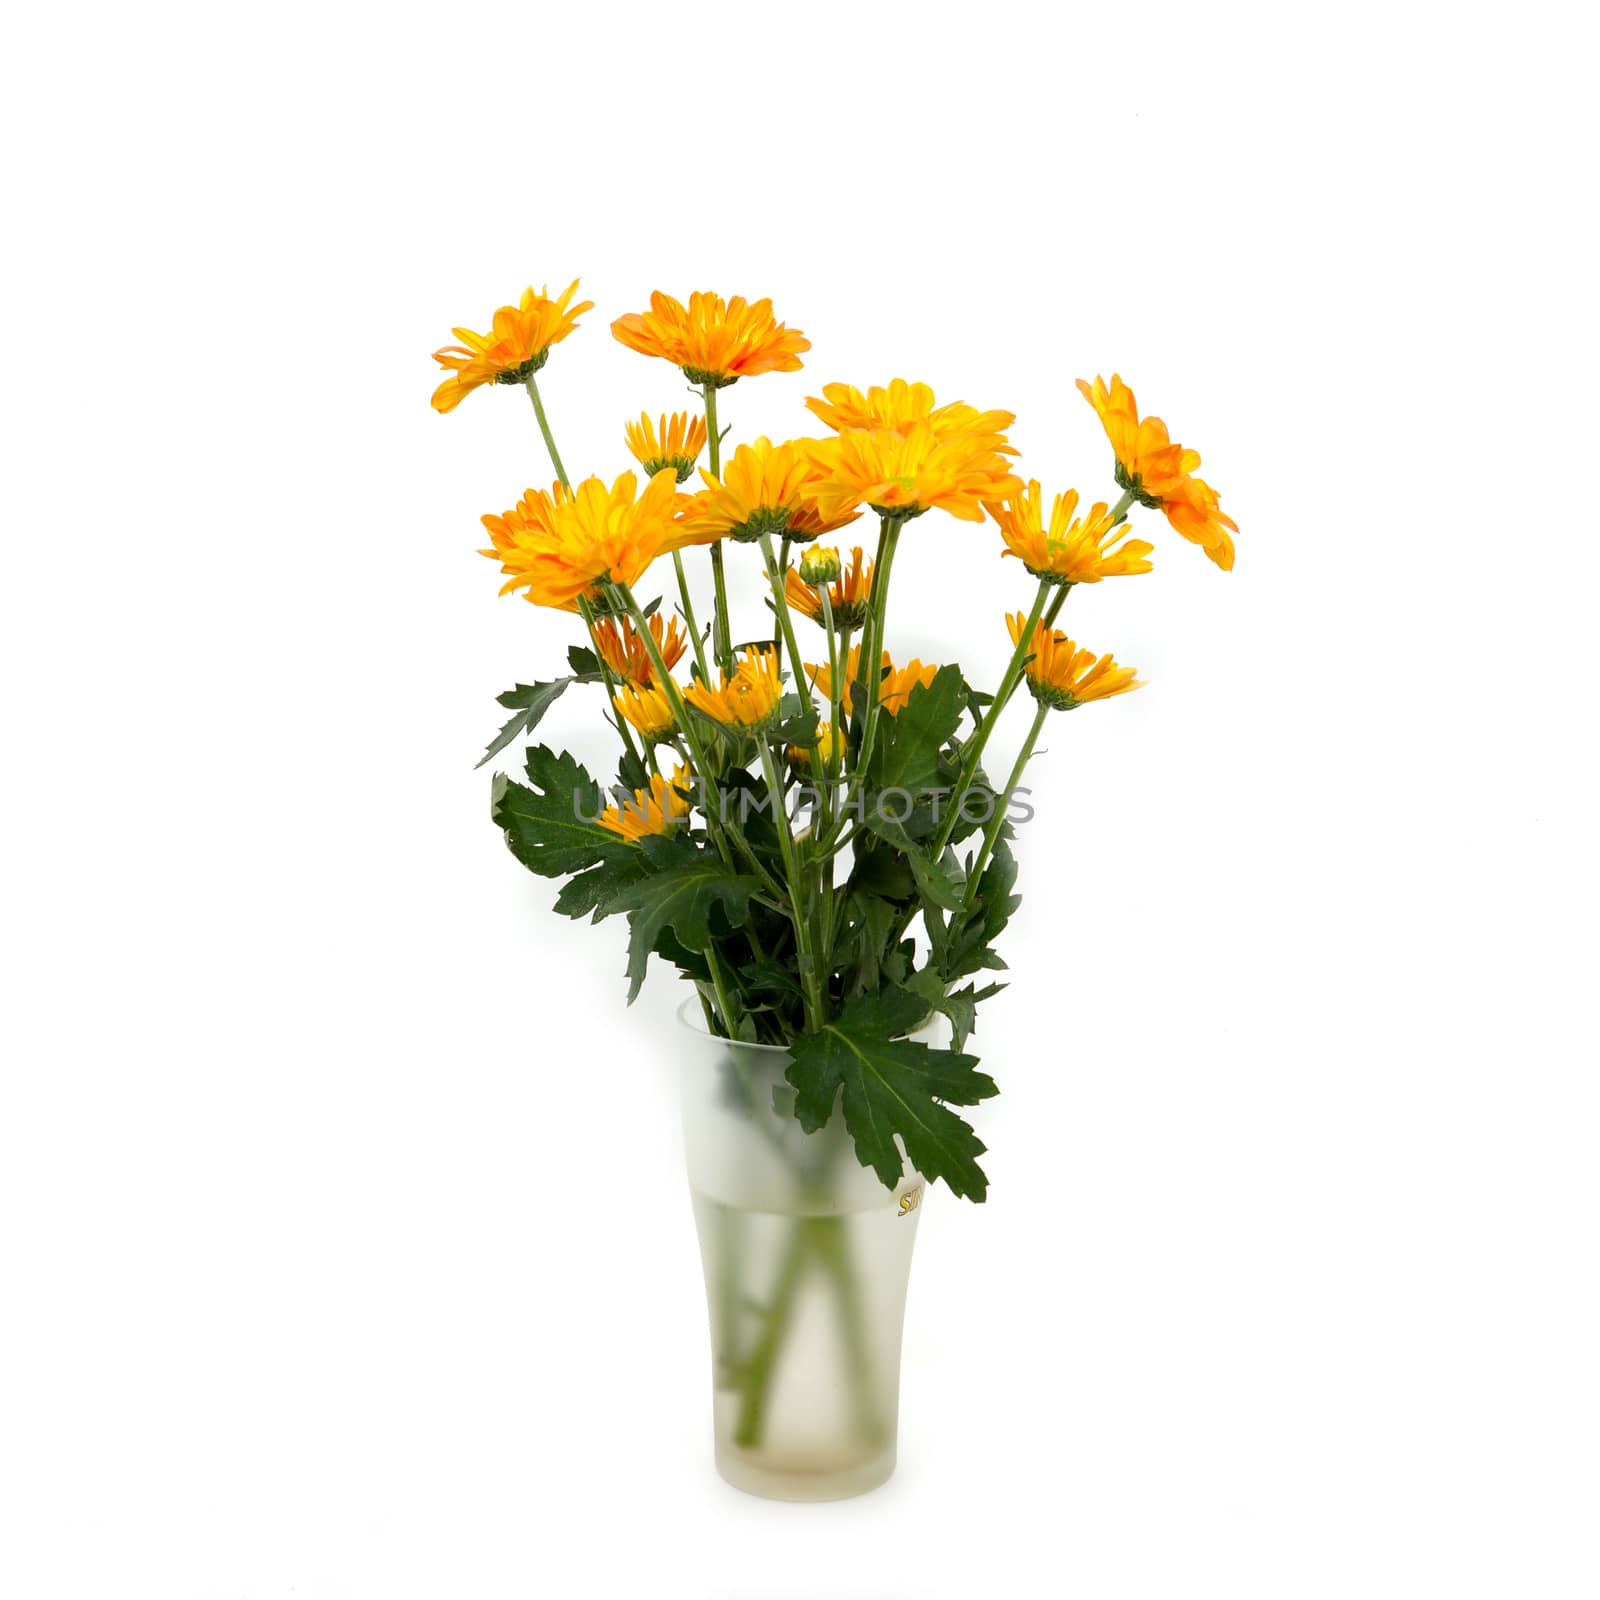 orange chrysanthemum on white background